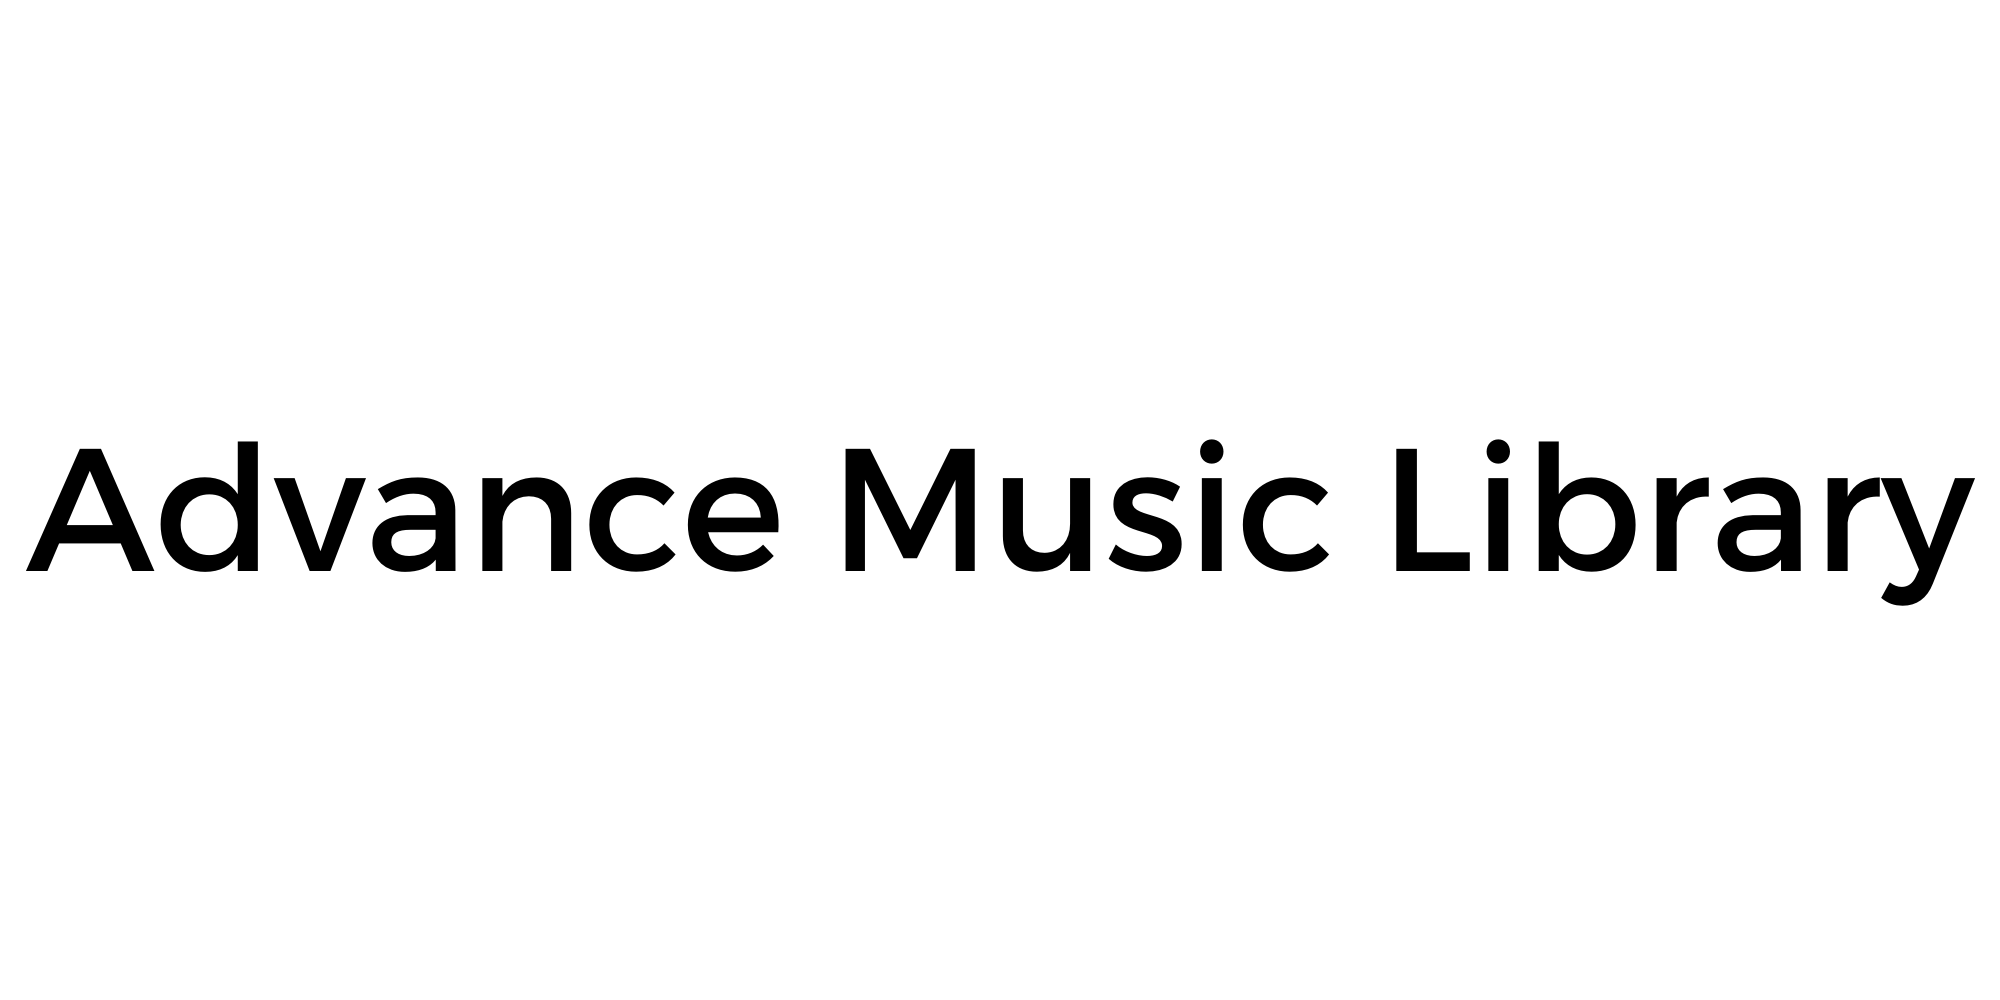 ADVANCE MUSIC LIBRARY